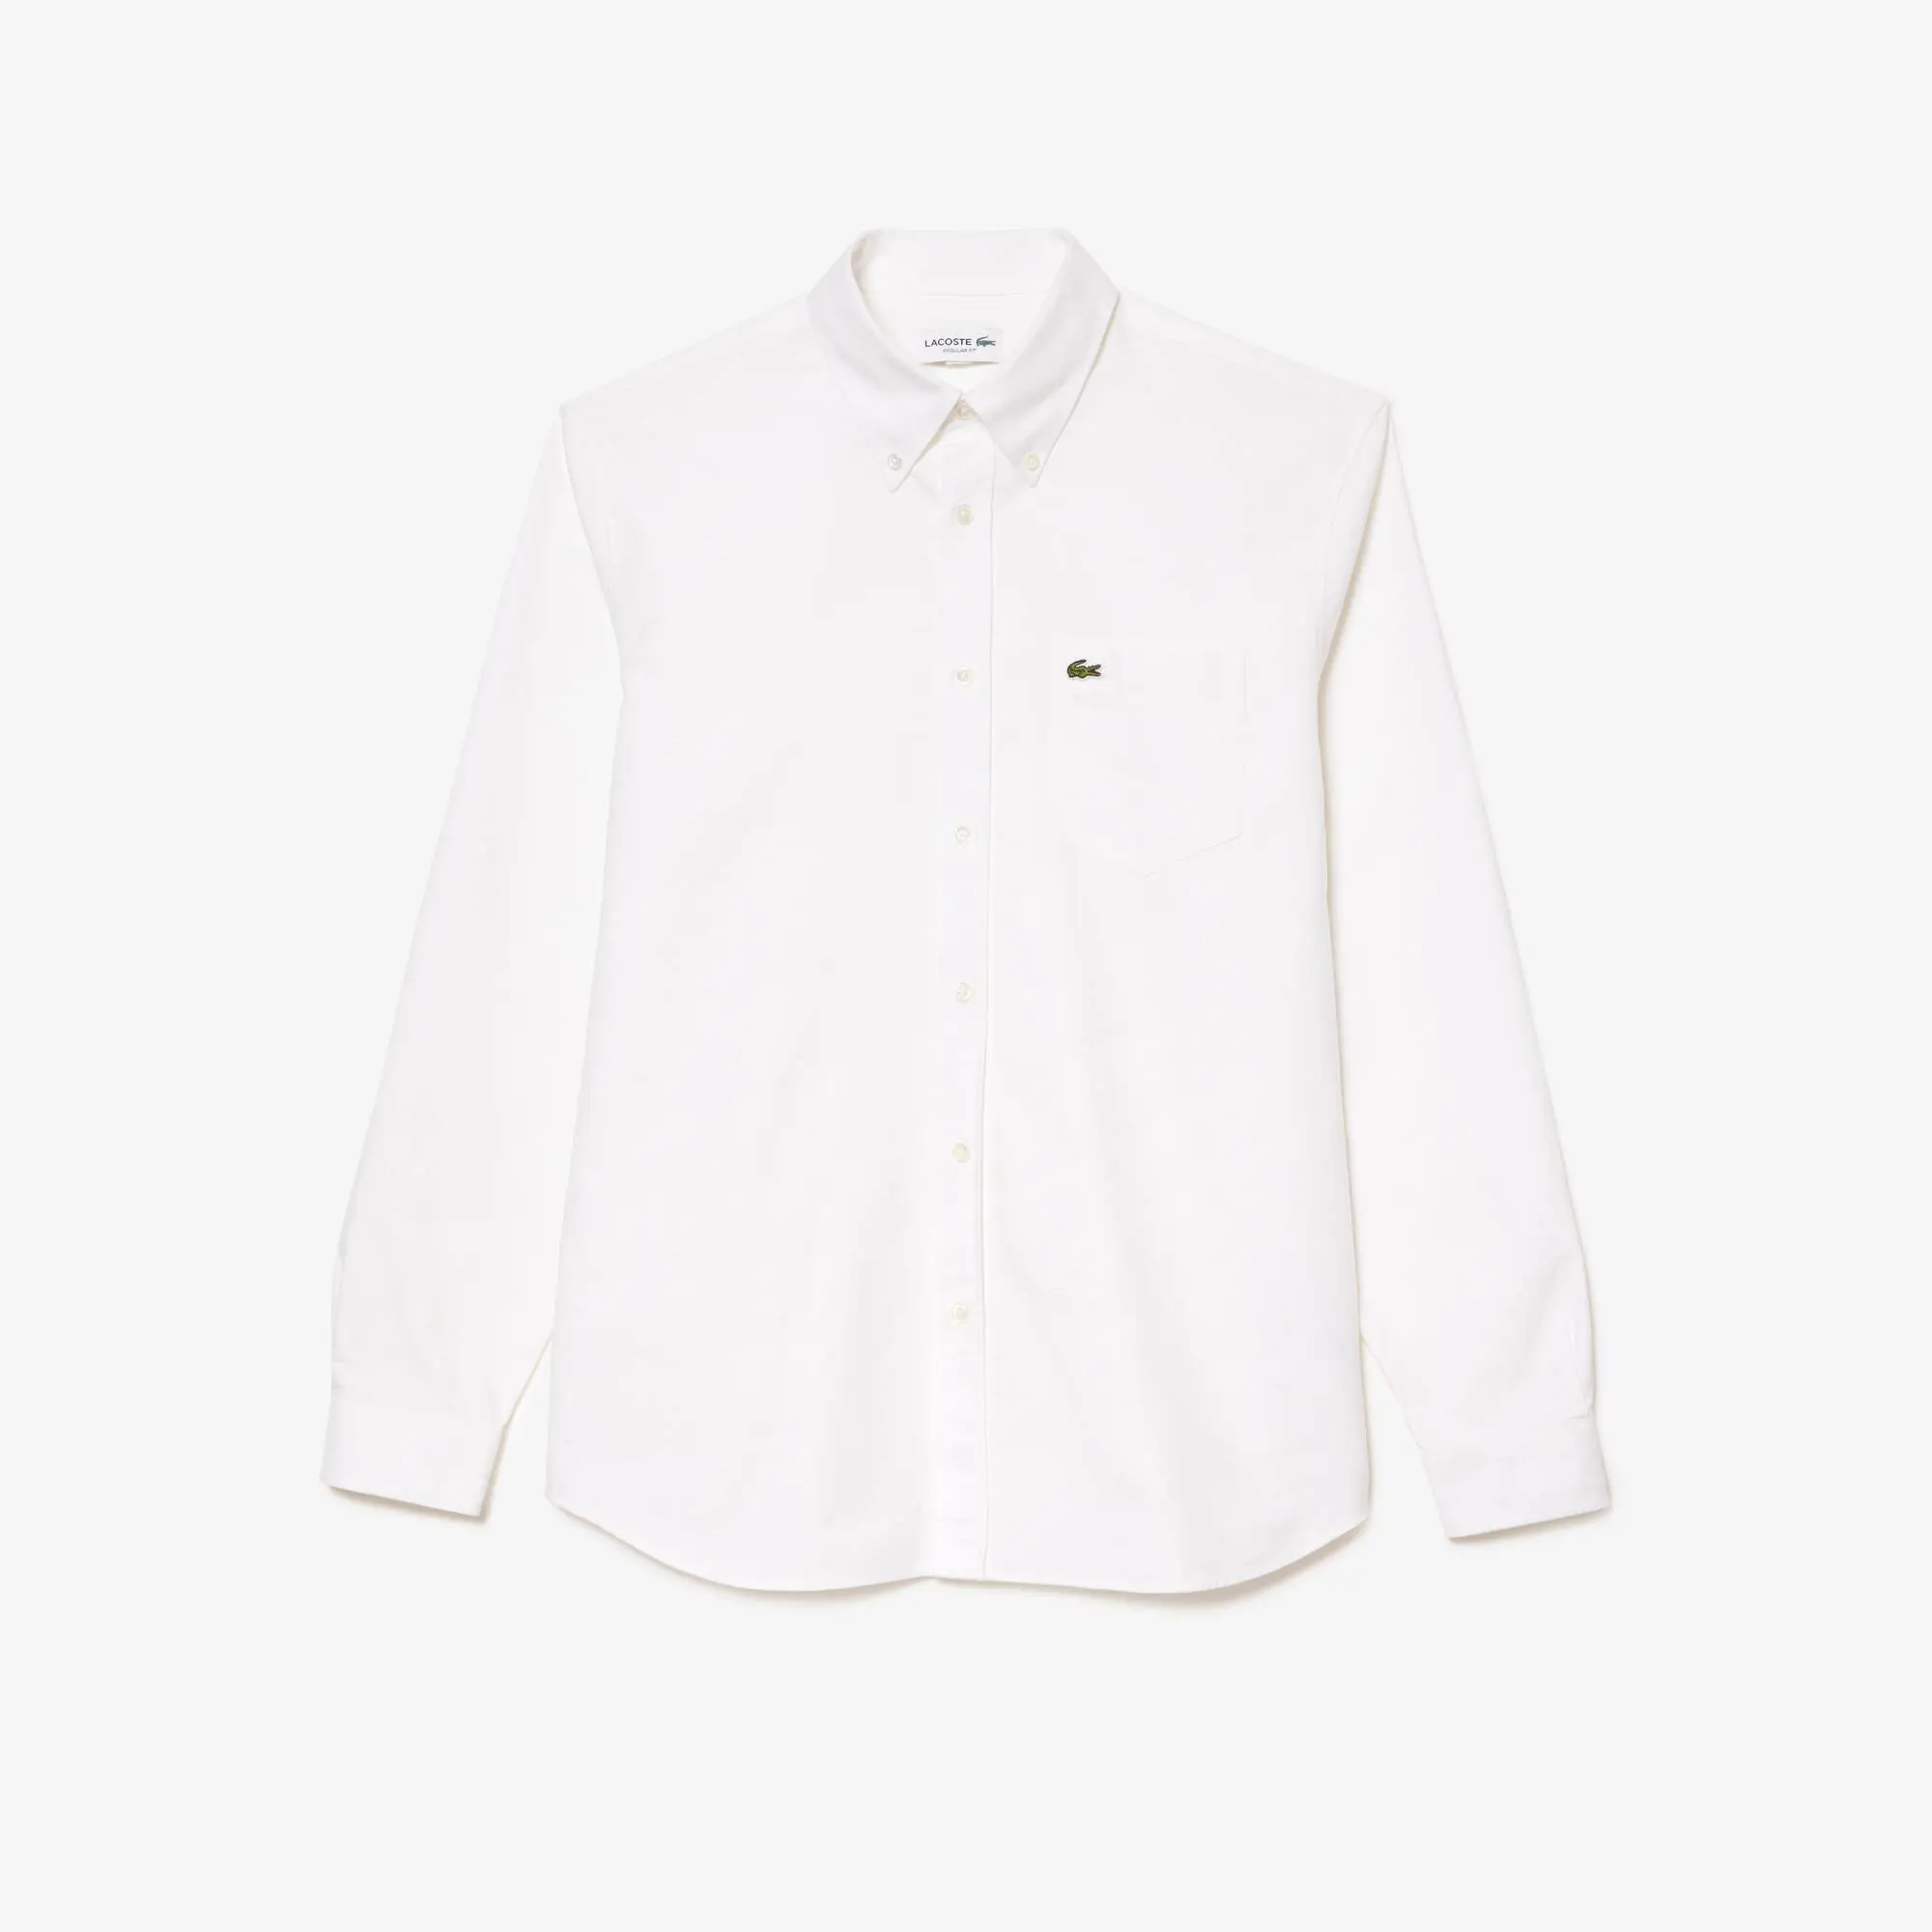 Lacoste Regular fit cotton Oxford shirt. 2